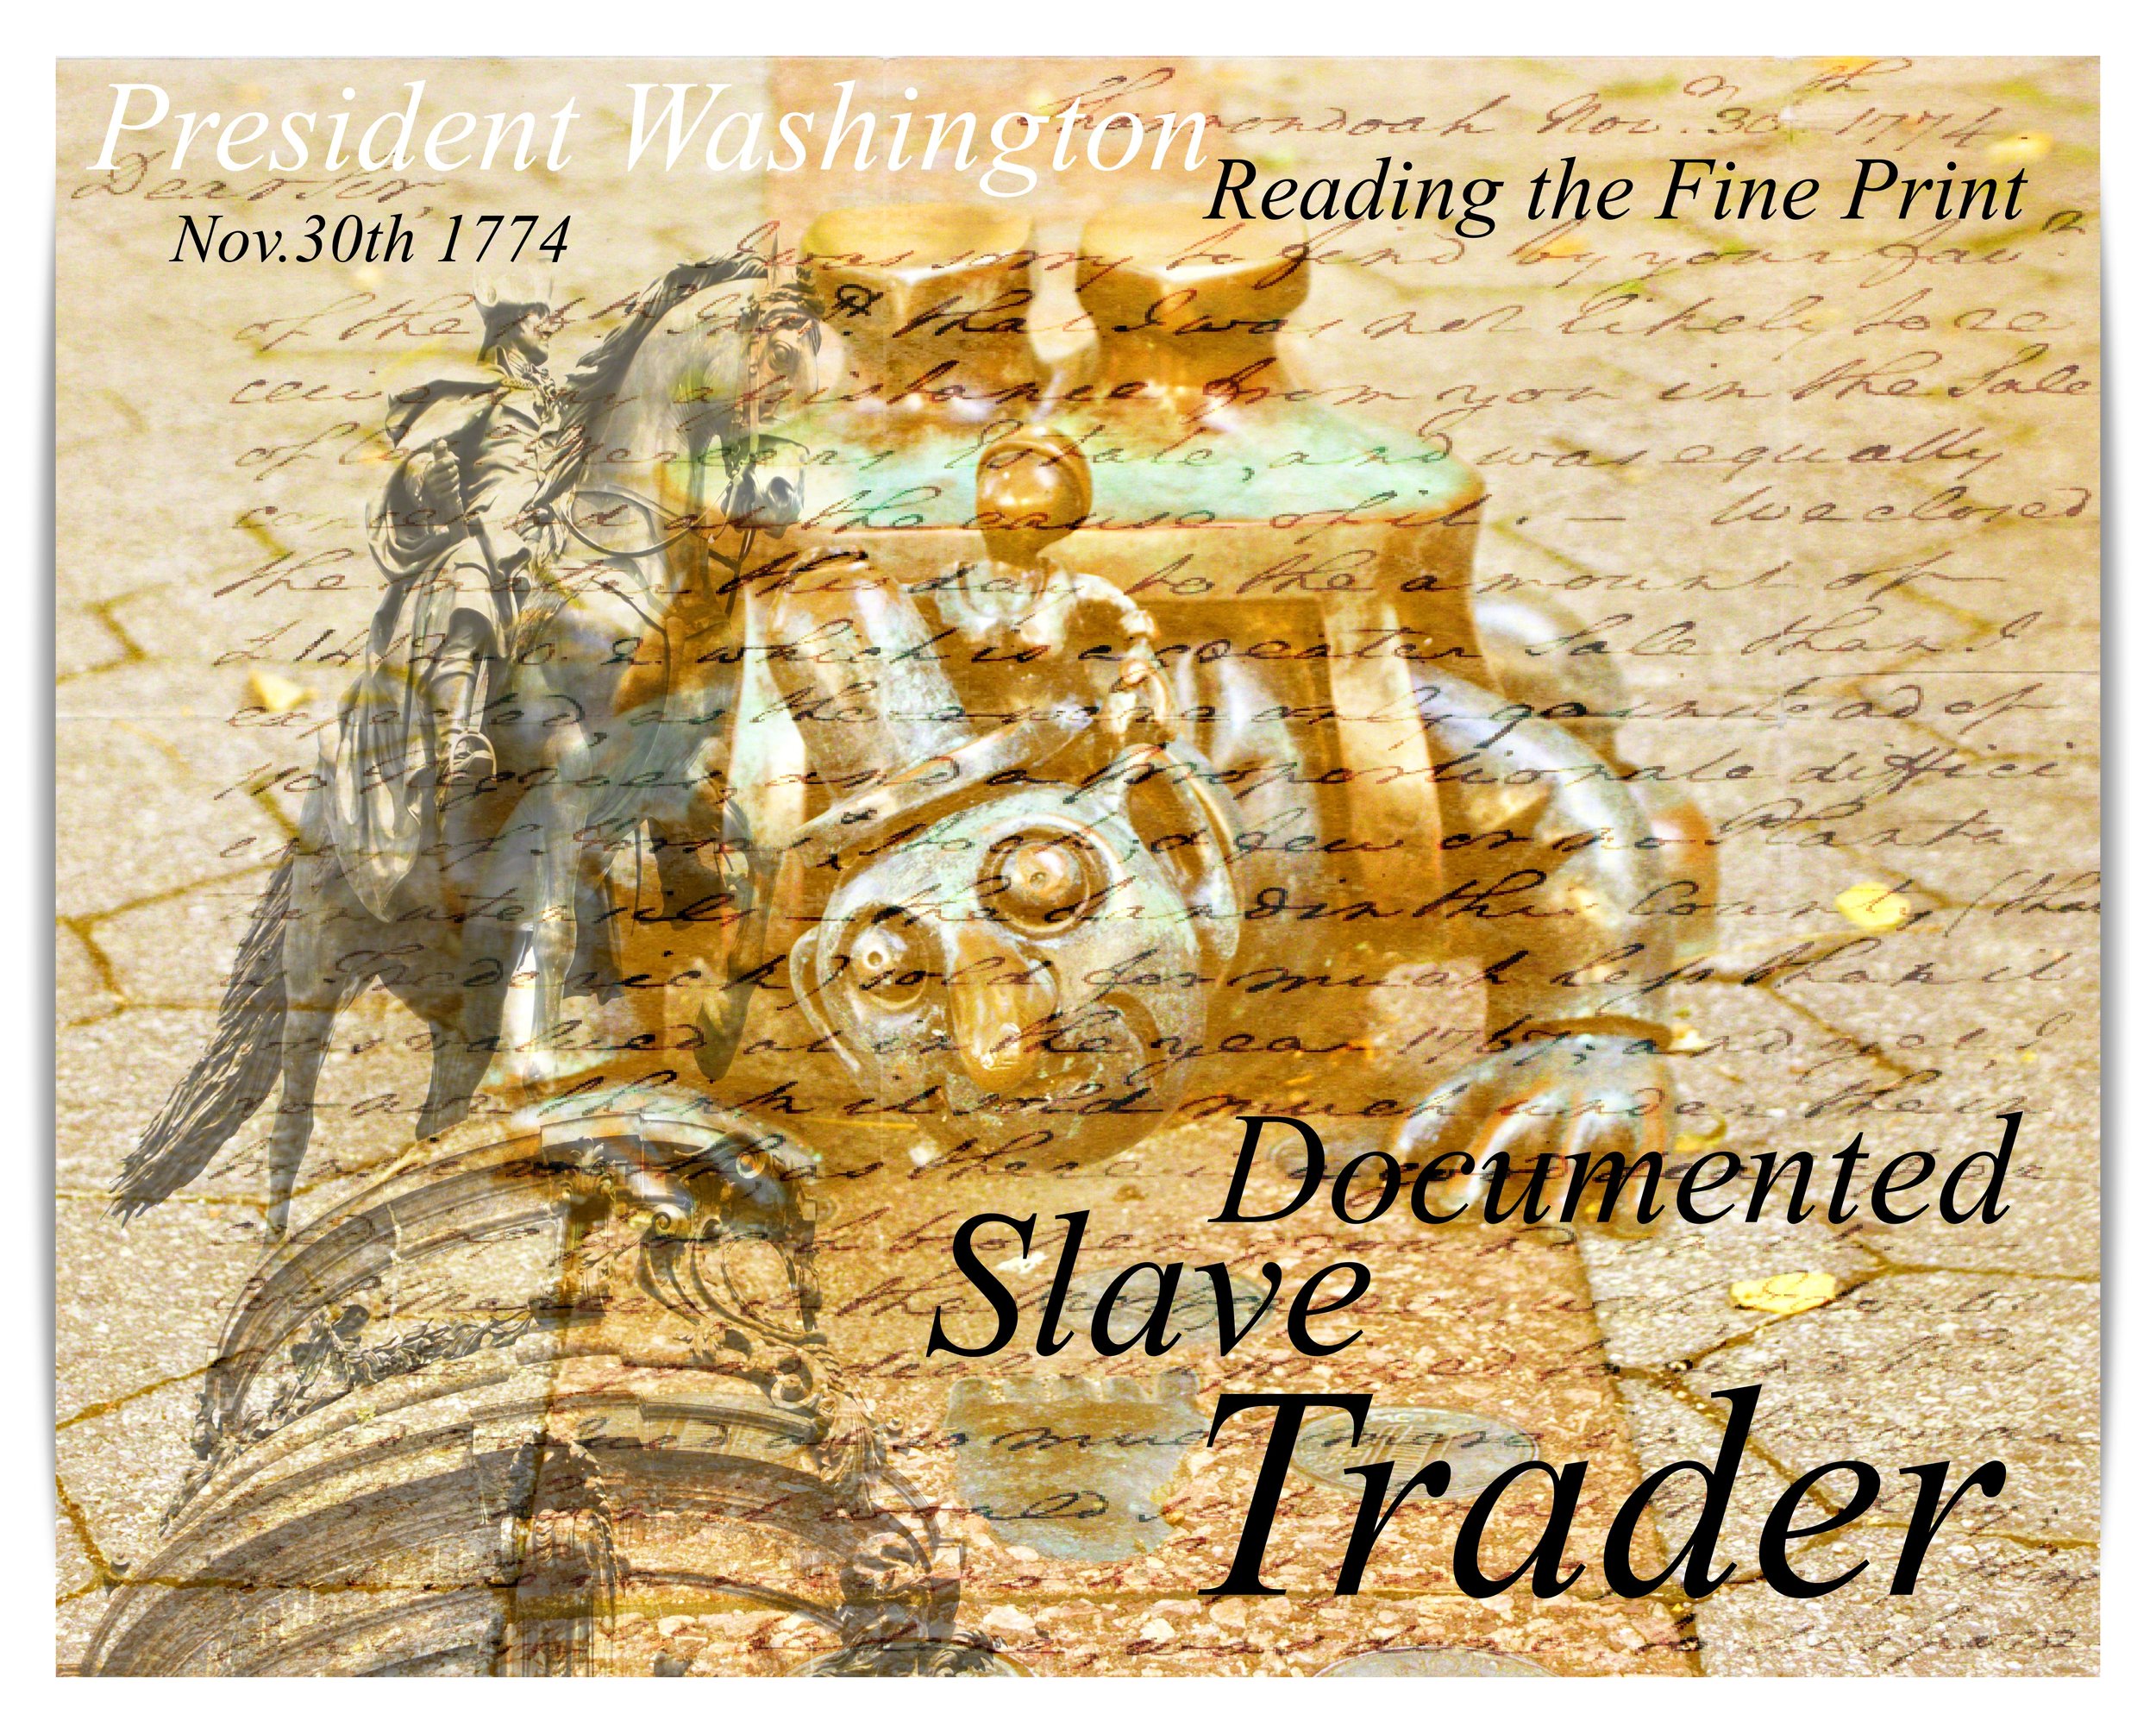 documented slave trader read the fine print.jpg